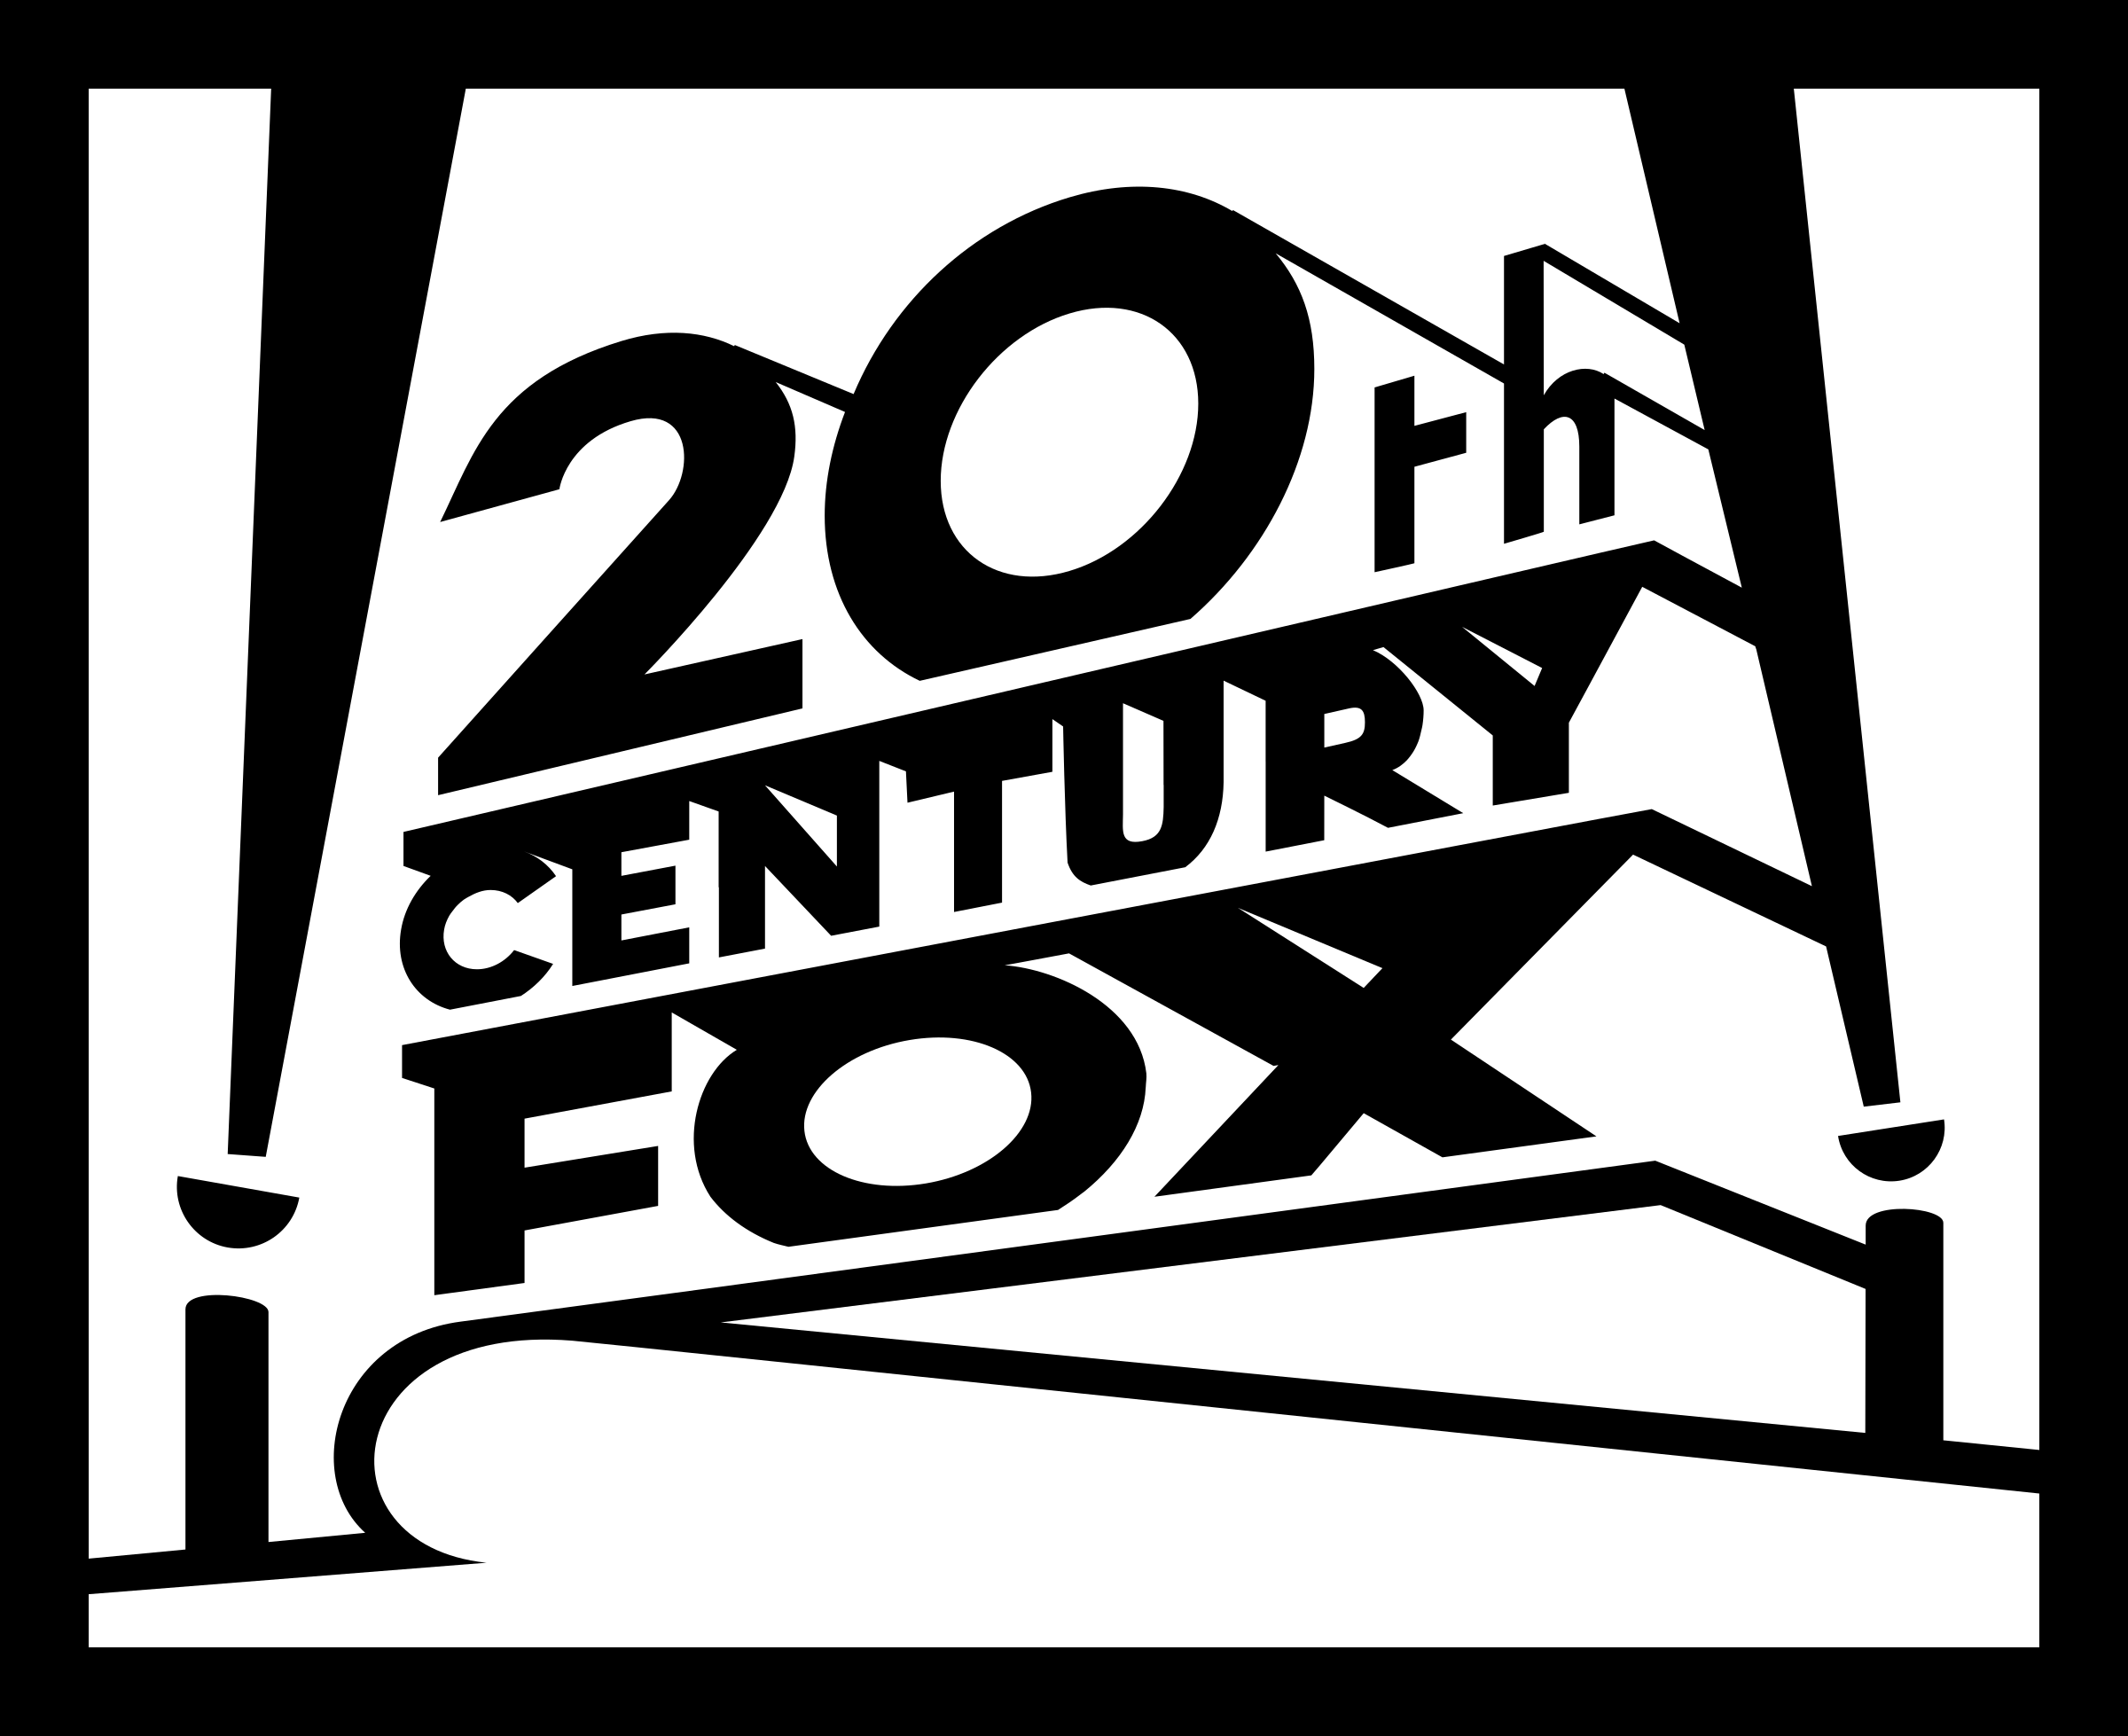 Century Fox Logo - 20th Century Fox Logo PNG Transparent & SVG Vector - Freebie Supply